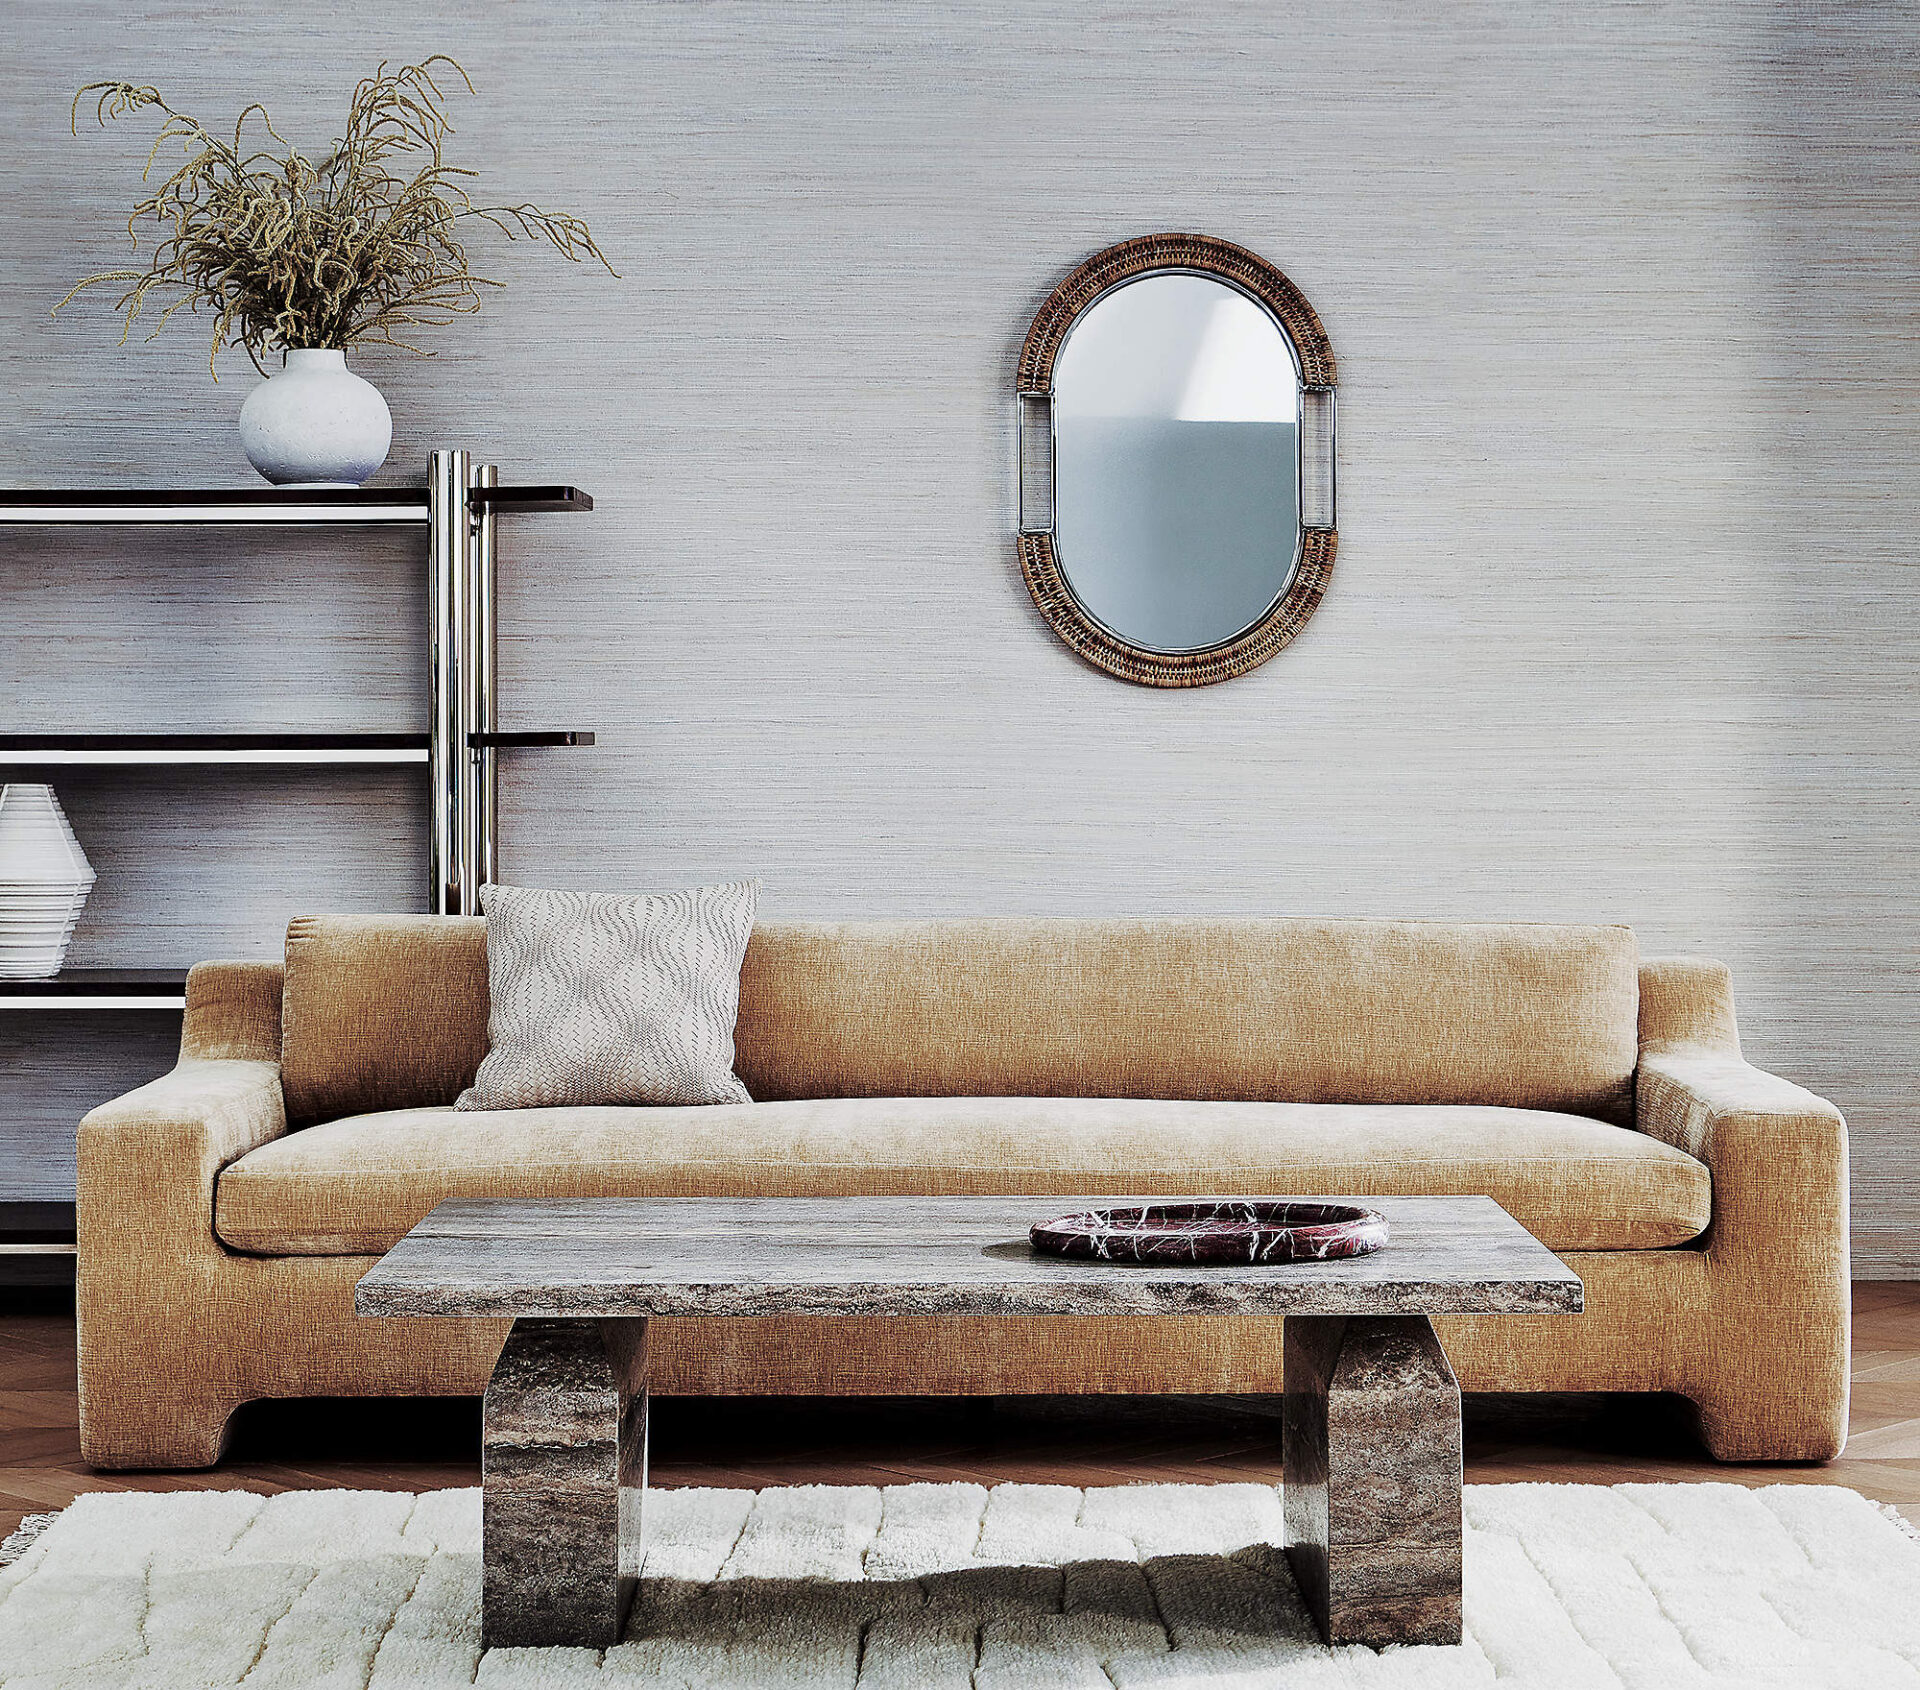 Cloud couch dupes: CB2's Durant Wheat Velvet Sofa